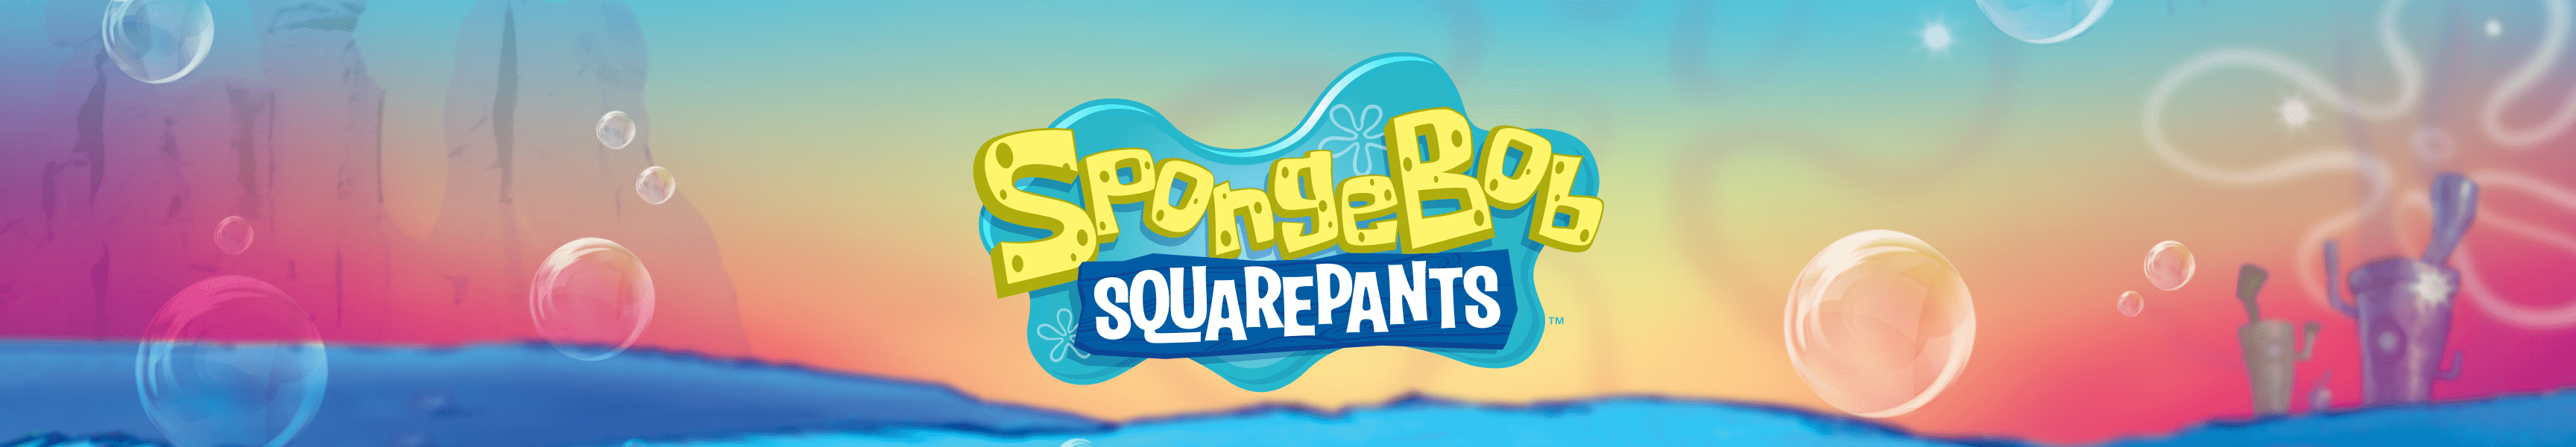 SpongeBob SquarePants Accessories